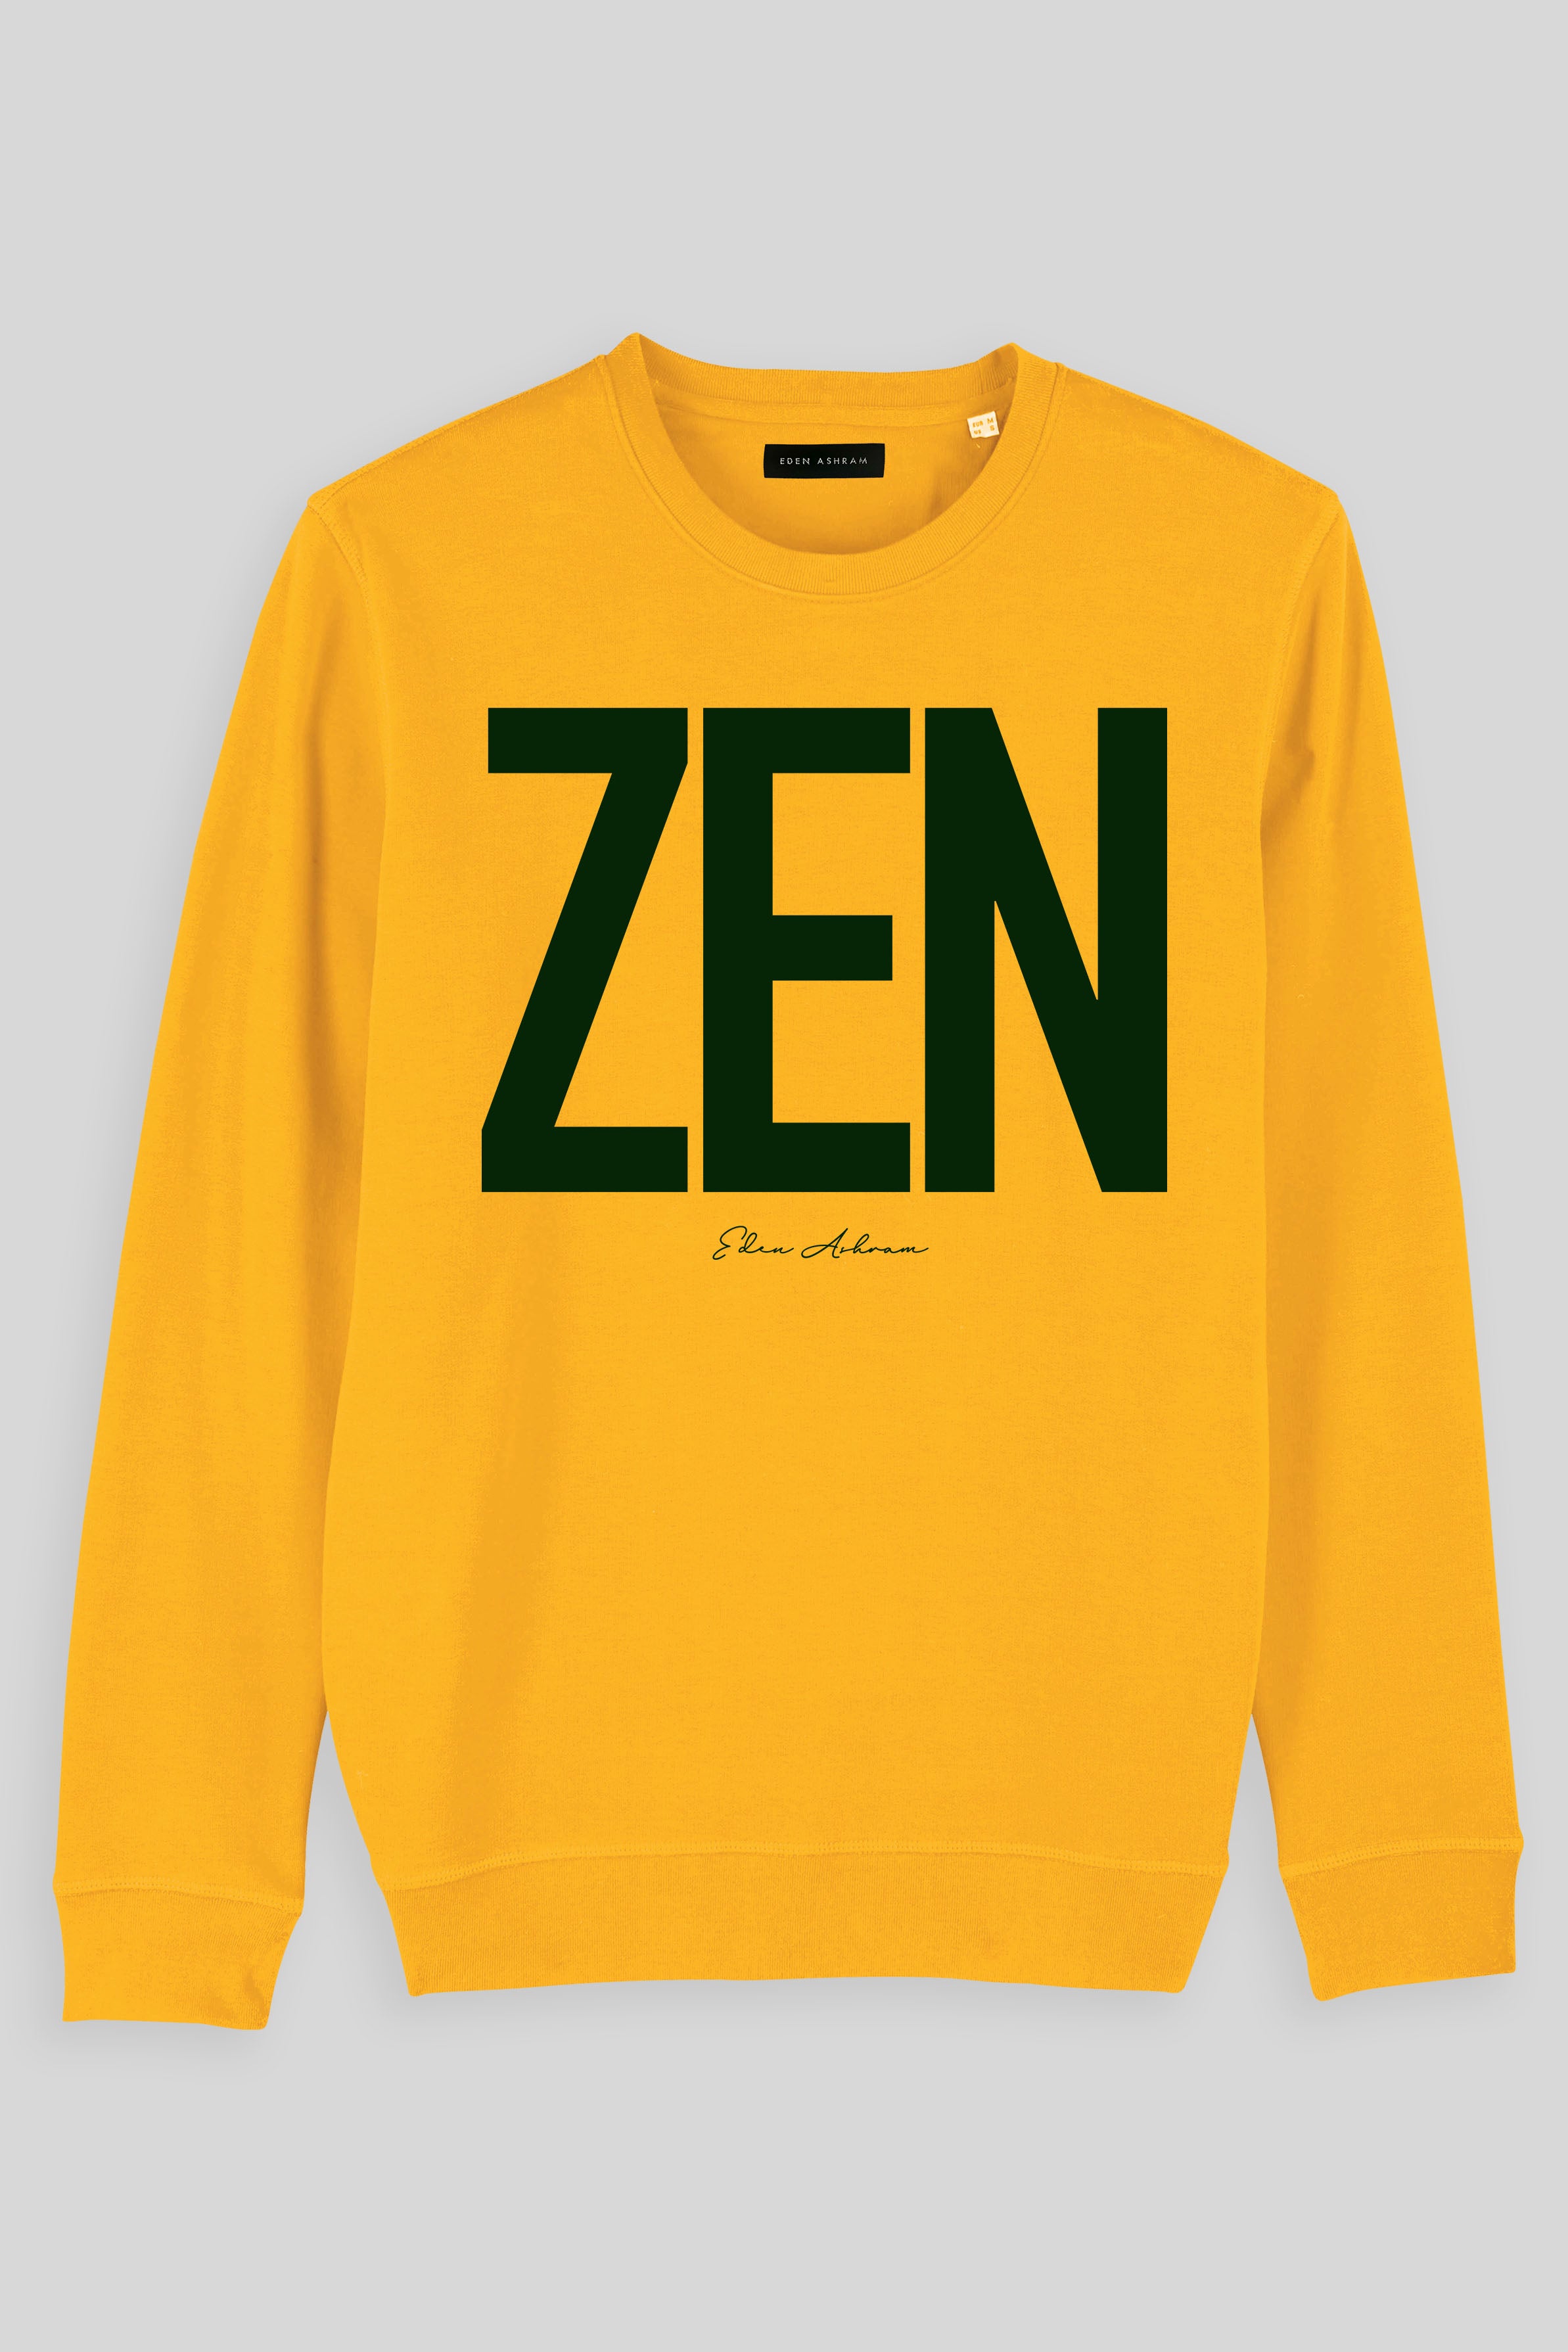 Eden Ashram ZEN Premium Crew Neck Sweatshirt Spectra Yellow